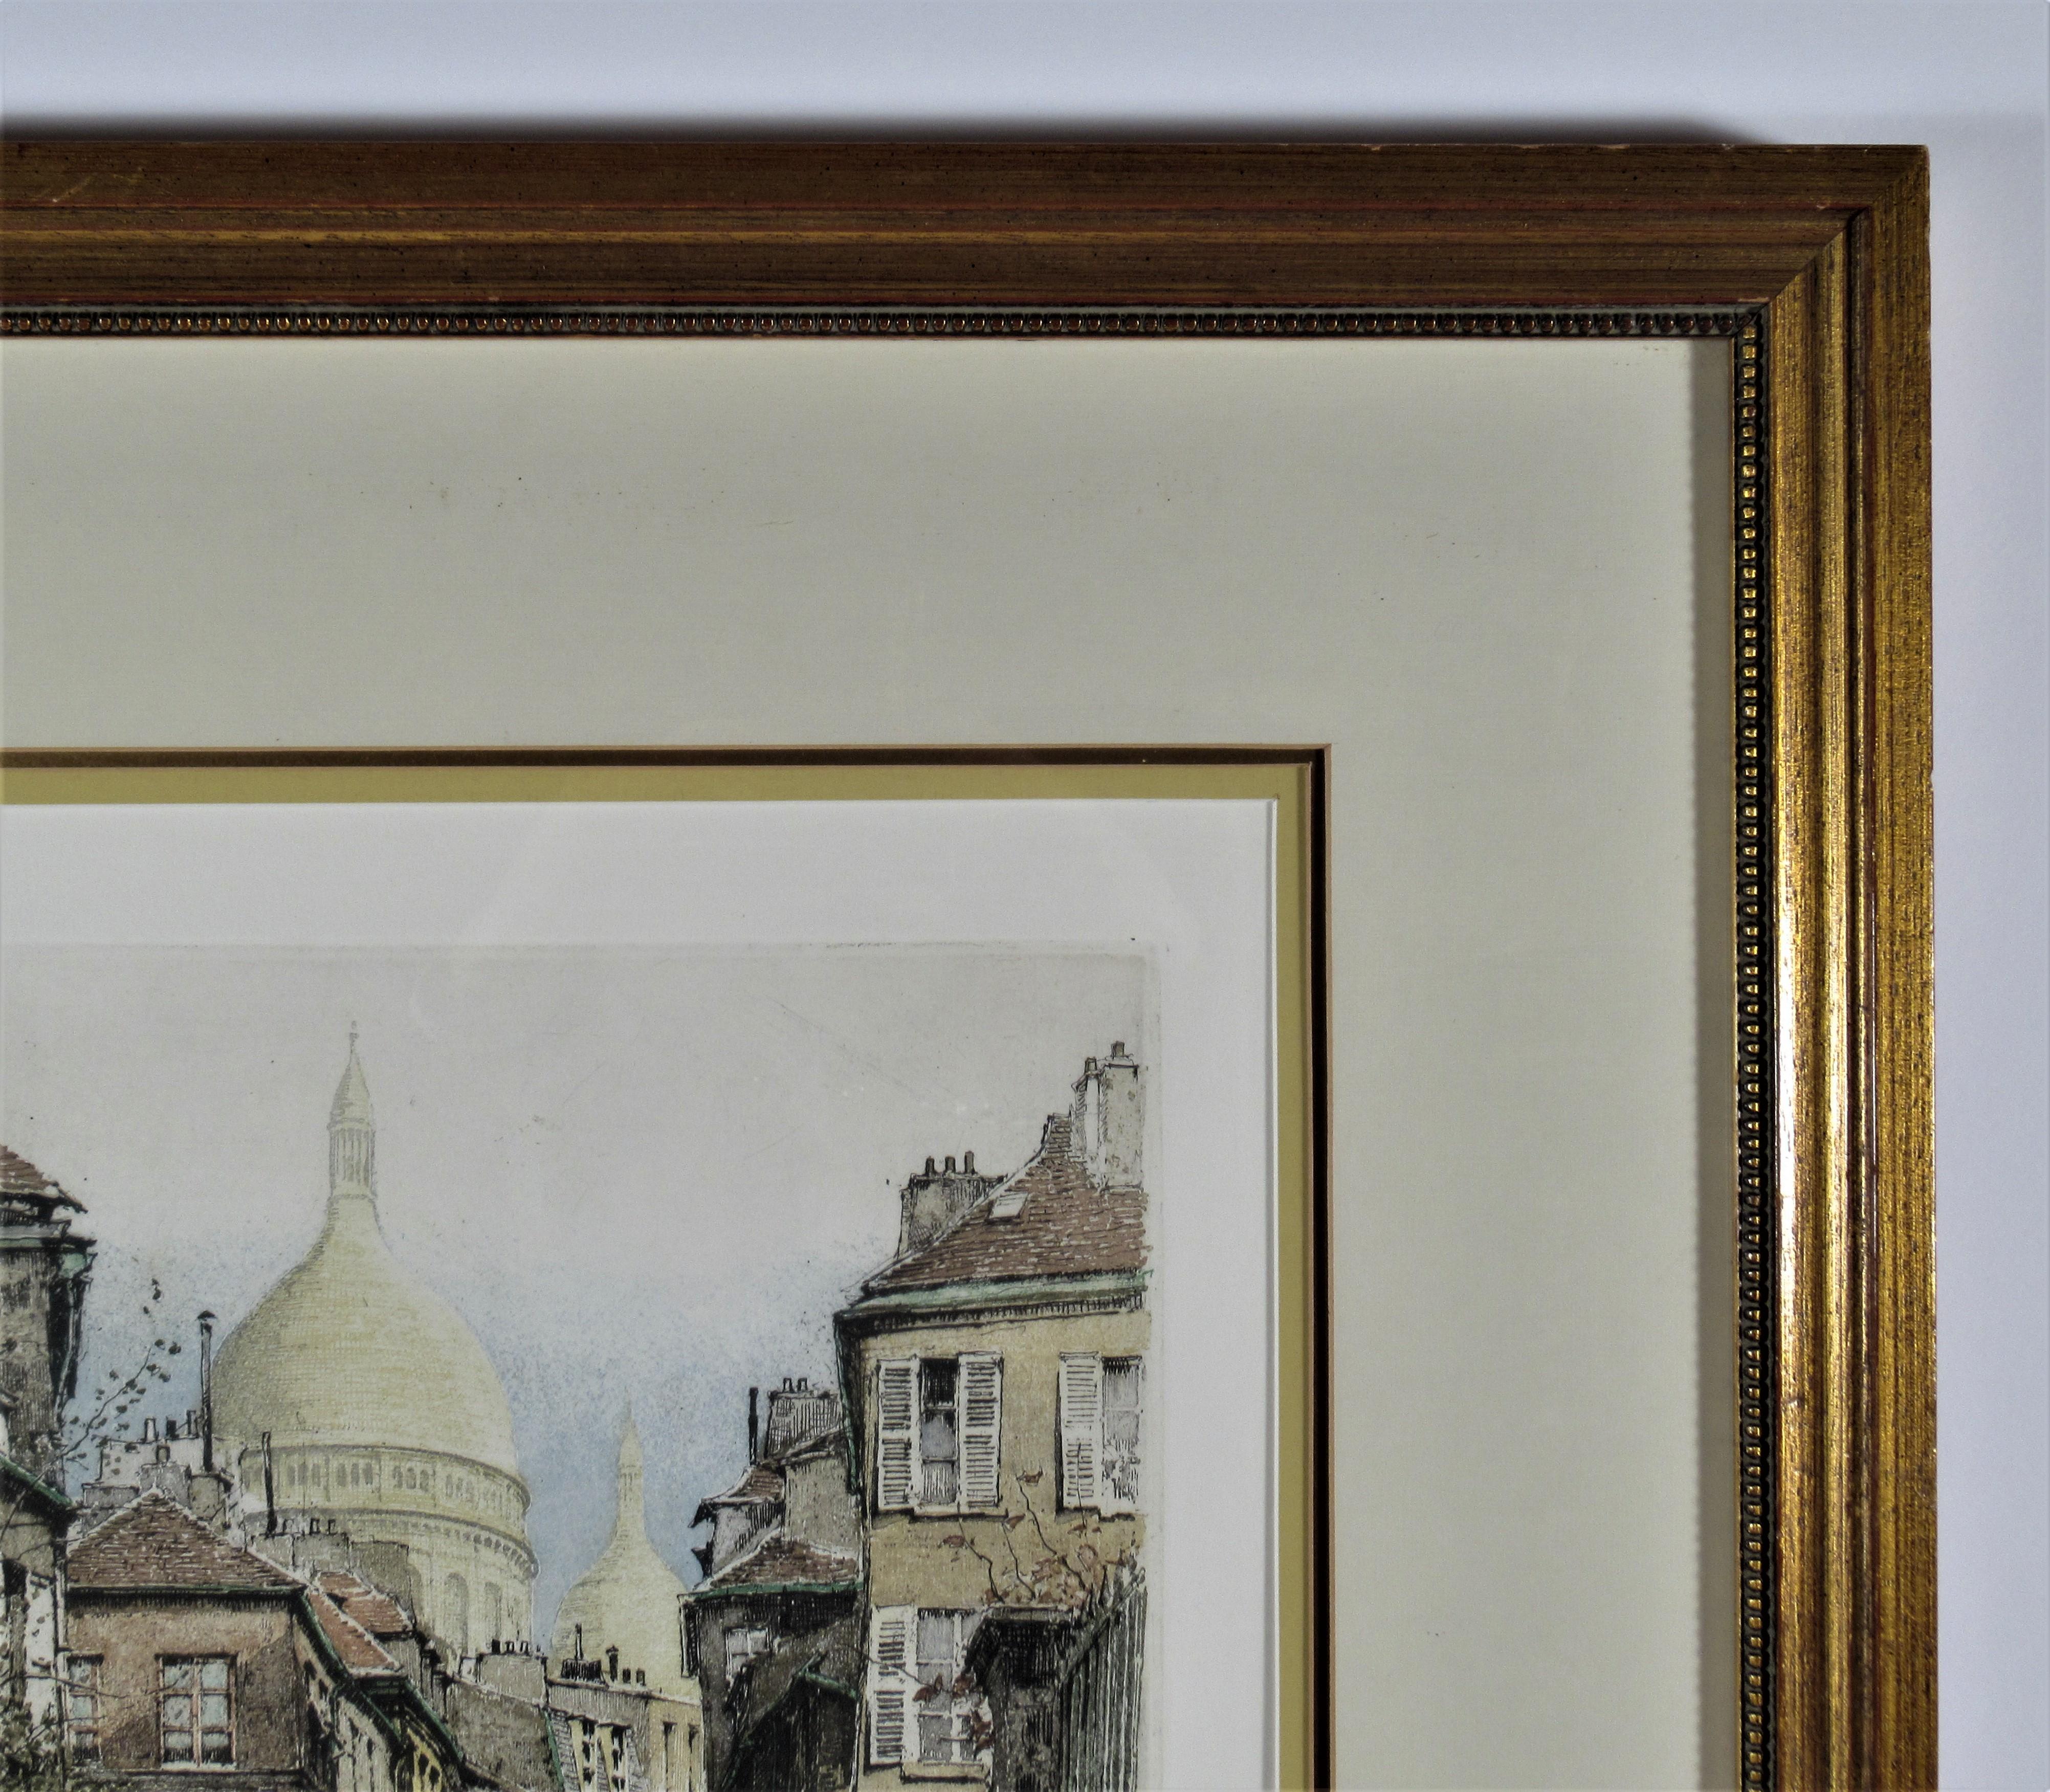 Paris, Montmartre, Le Sacre Coeur - Realist Print by Robert Kasimir